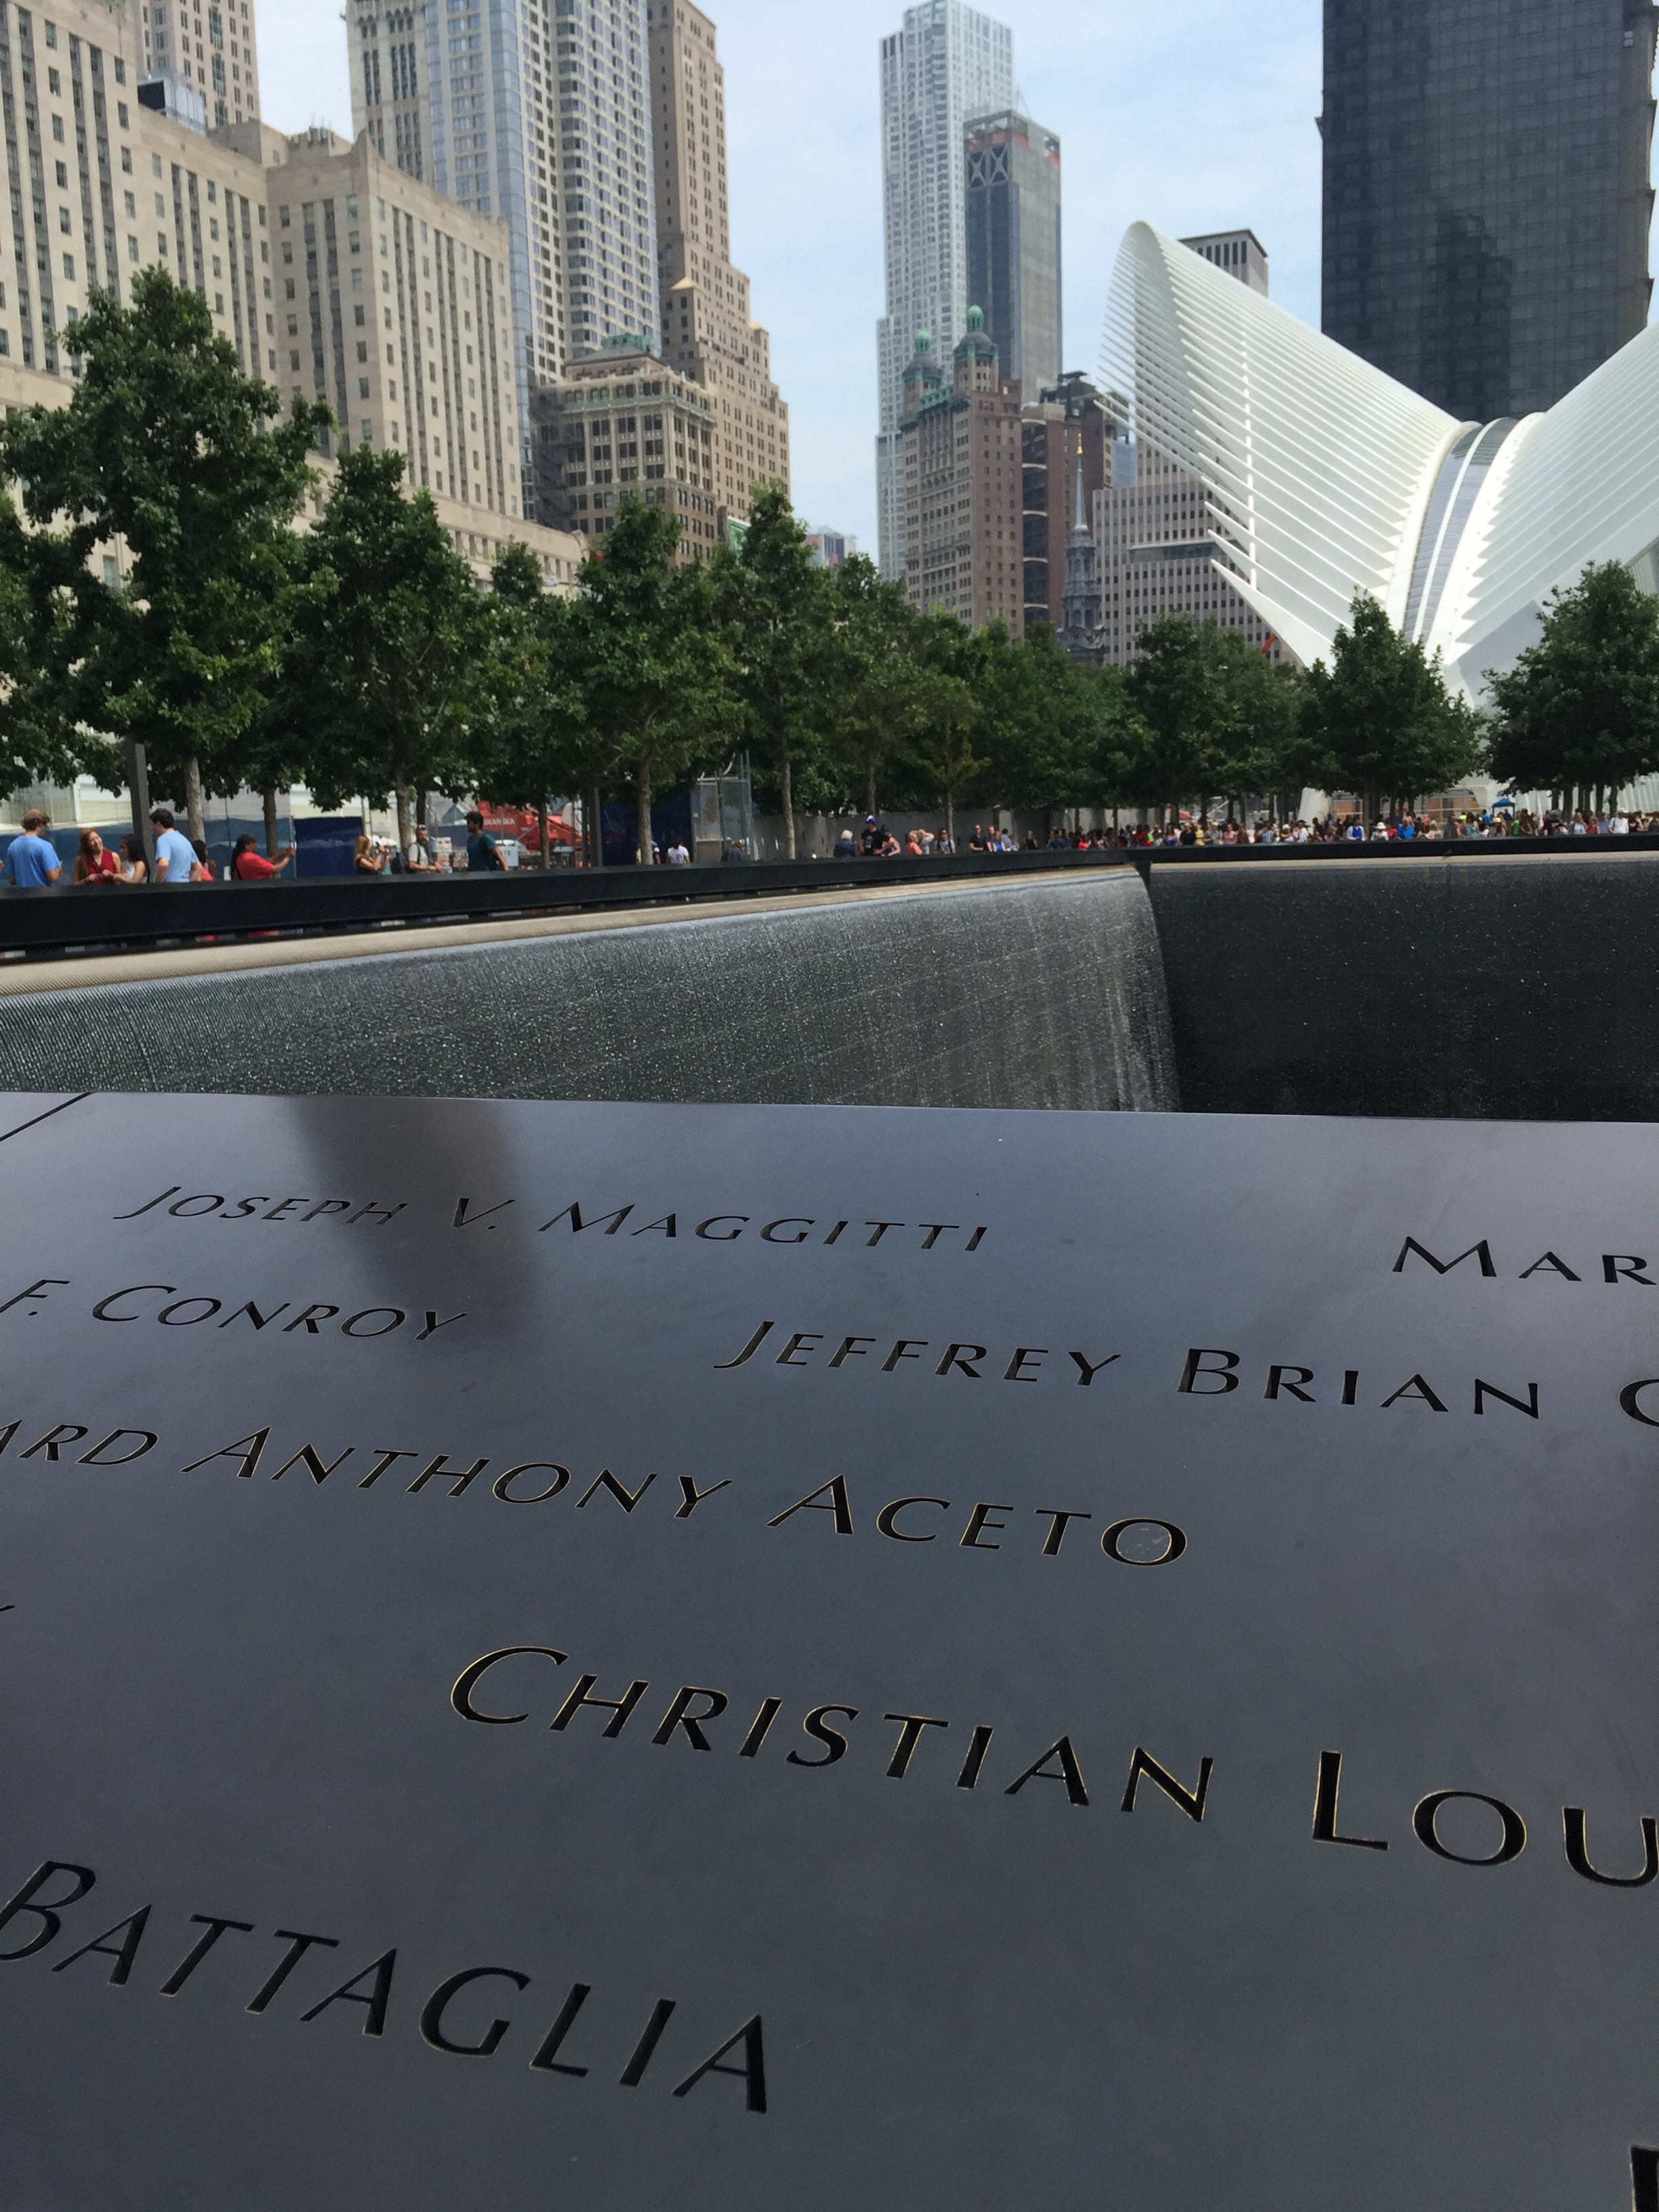 911 memorials